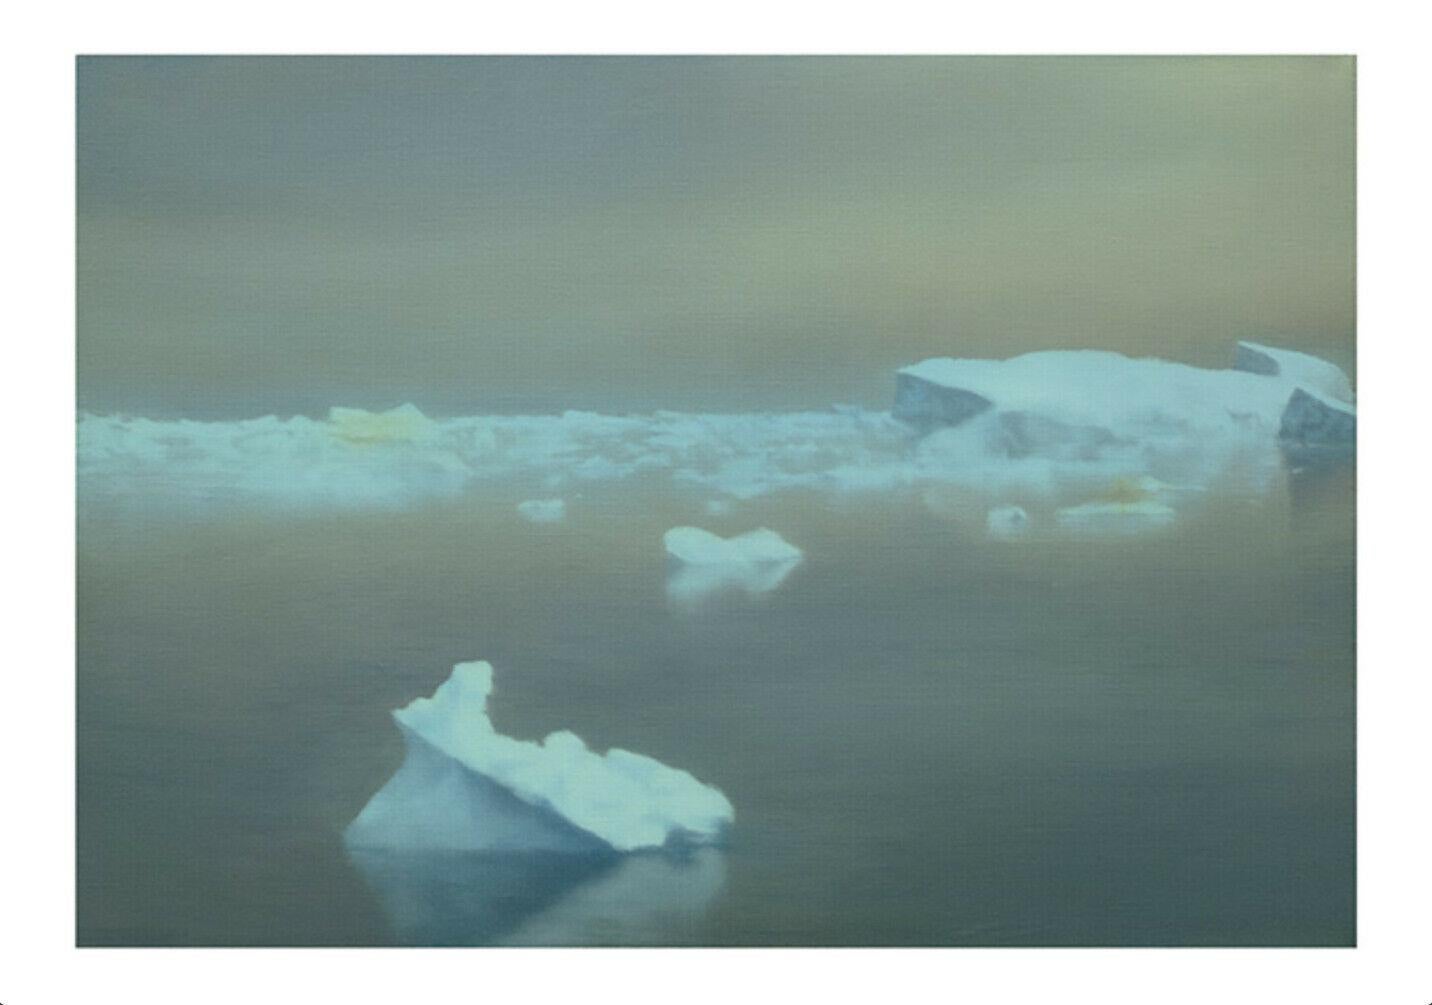 Eis (Ice) by Gerhard Richter